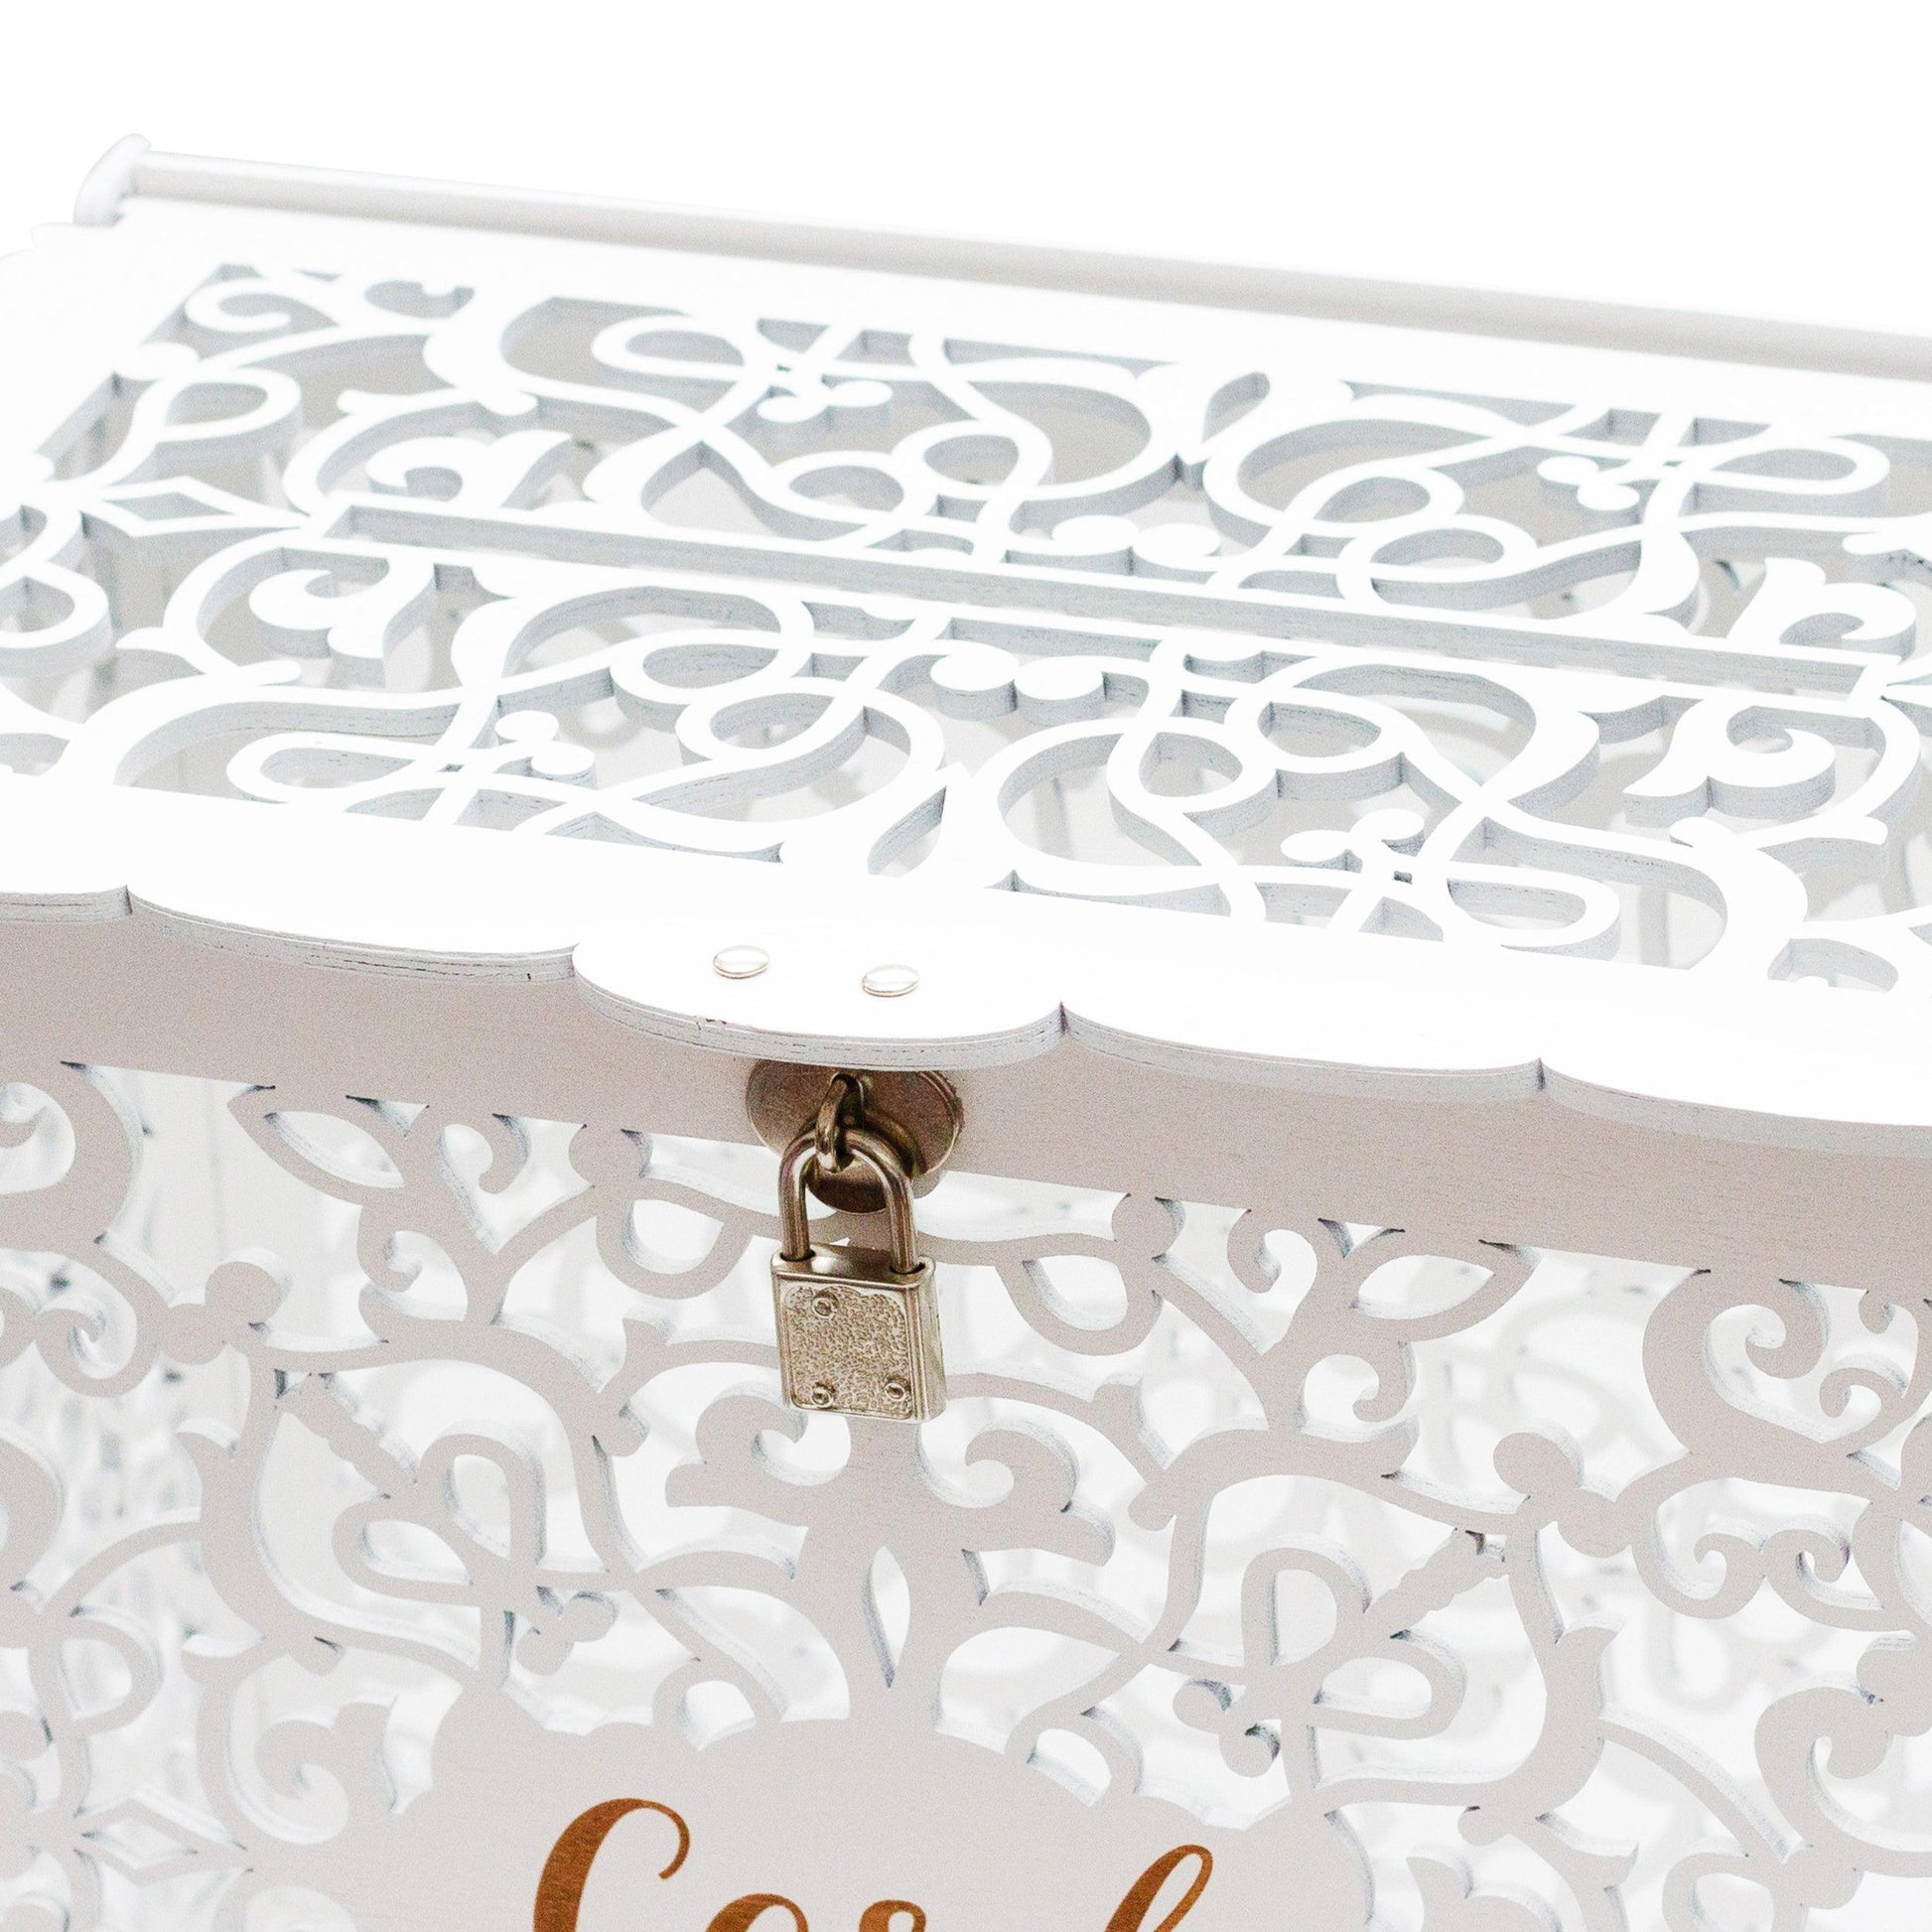 Wedding Gift Card Box with Lock - JAHomesUS